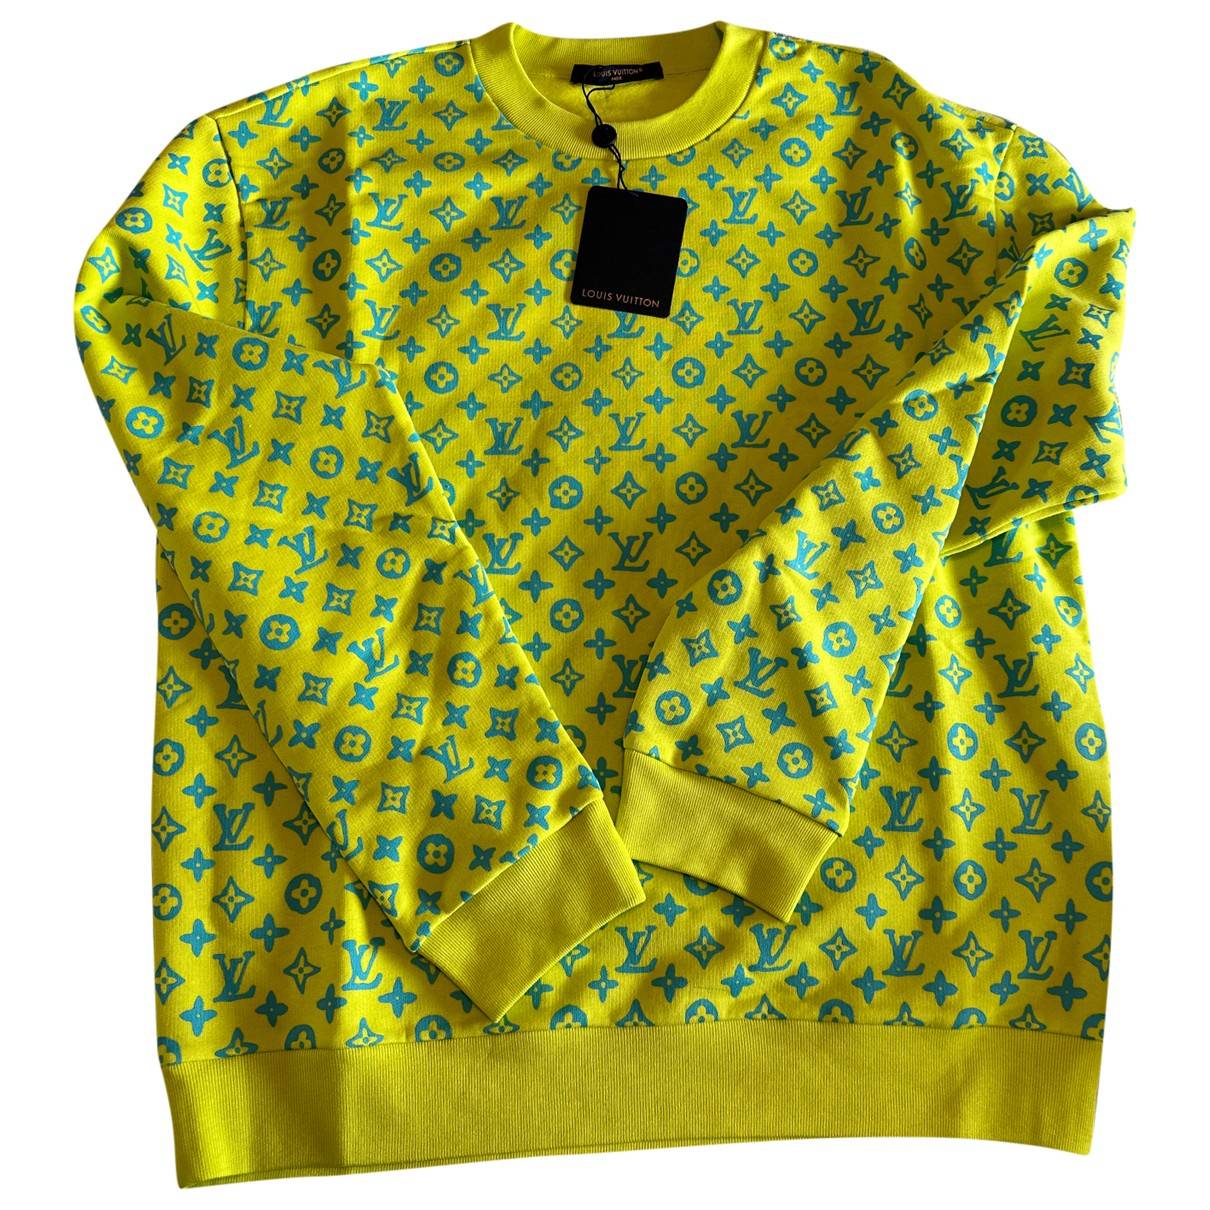 Sweatshirt Louis Vuitton Yellow size M International in Cotton - 31016998